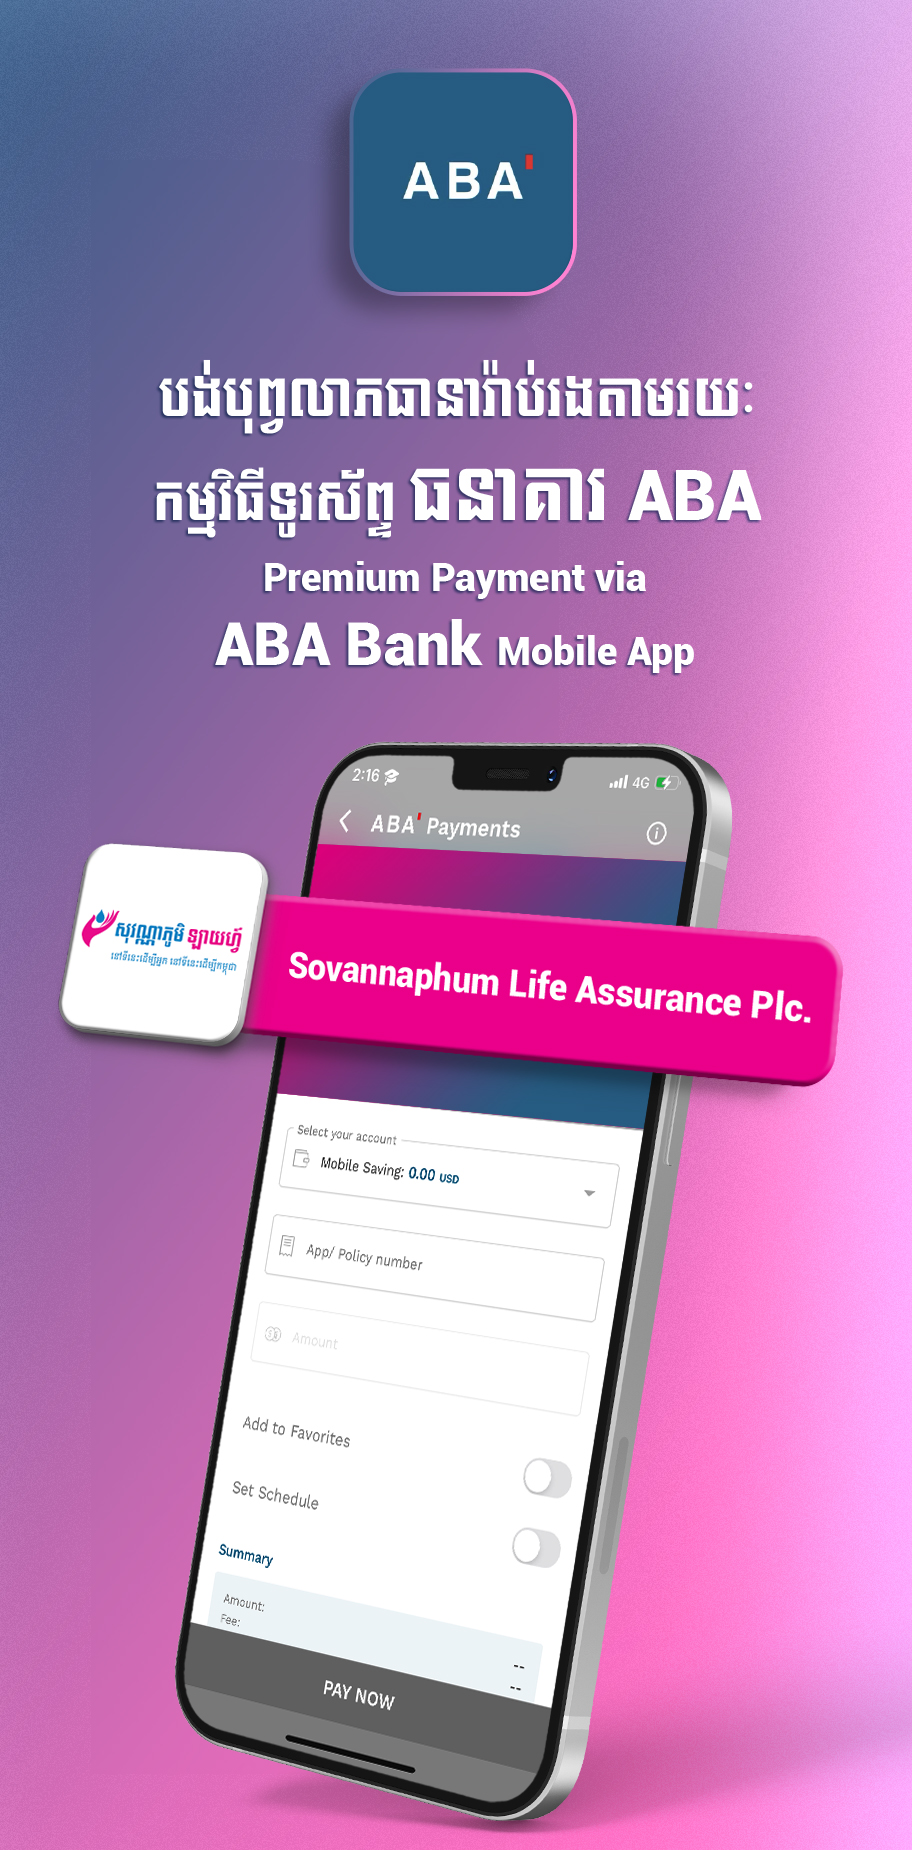 Premium payment via Mobile Bank_ABA Bank_V Banner_V3 (2)